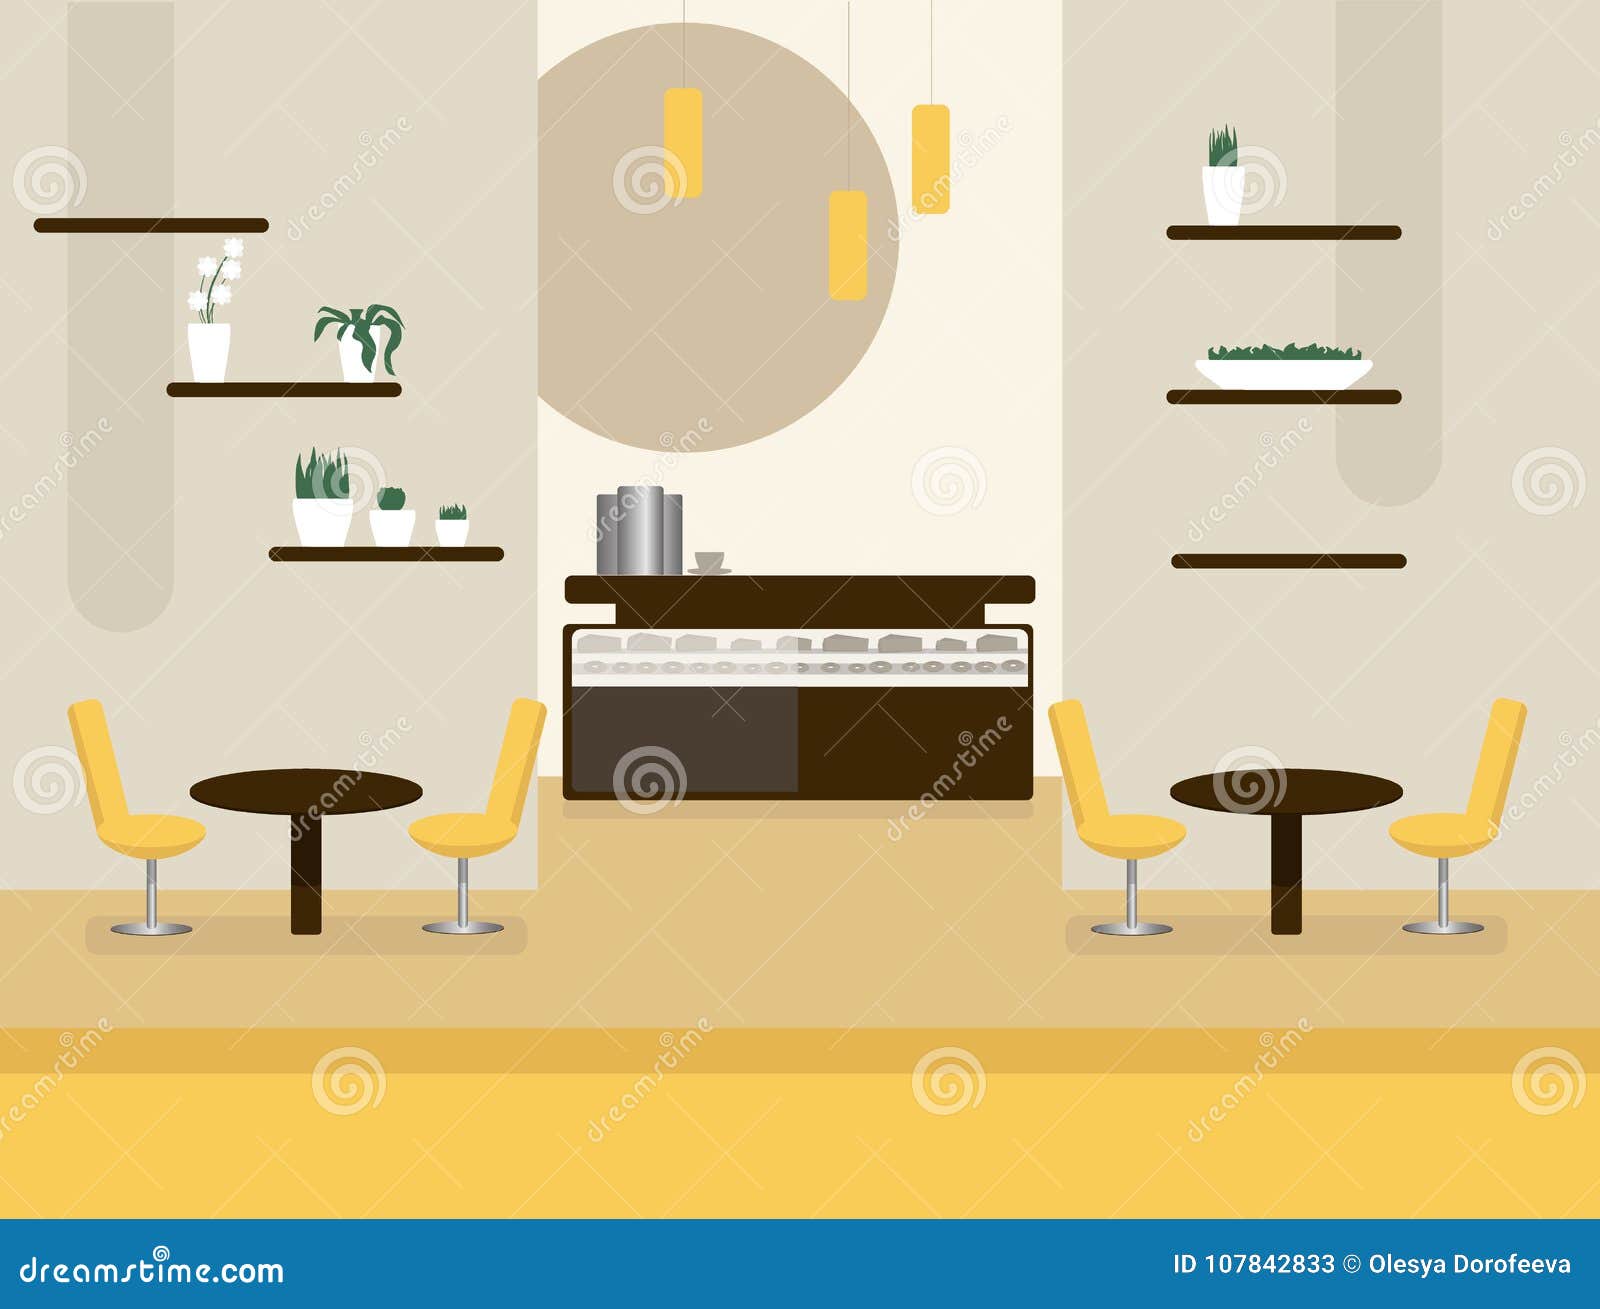 Cozy coffee house stock illustration. Illustration of food - 107842833